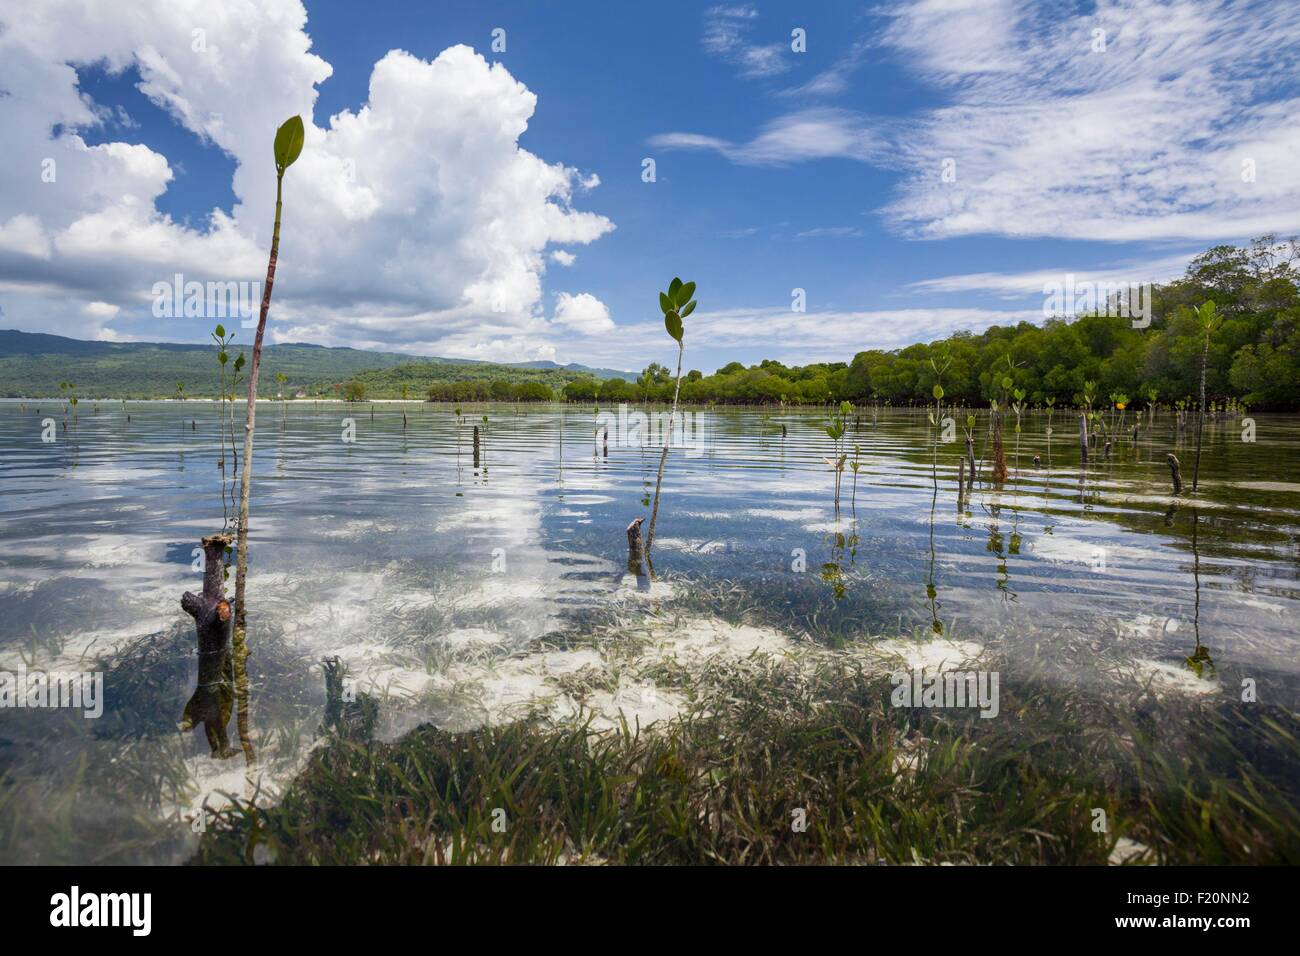 Indonesia, Lesser Sunda Islands, Alor Island, Sika Island, Mangrove trees plantation Stock Photo